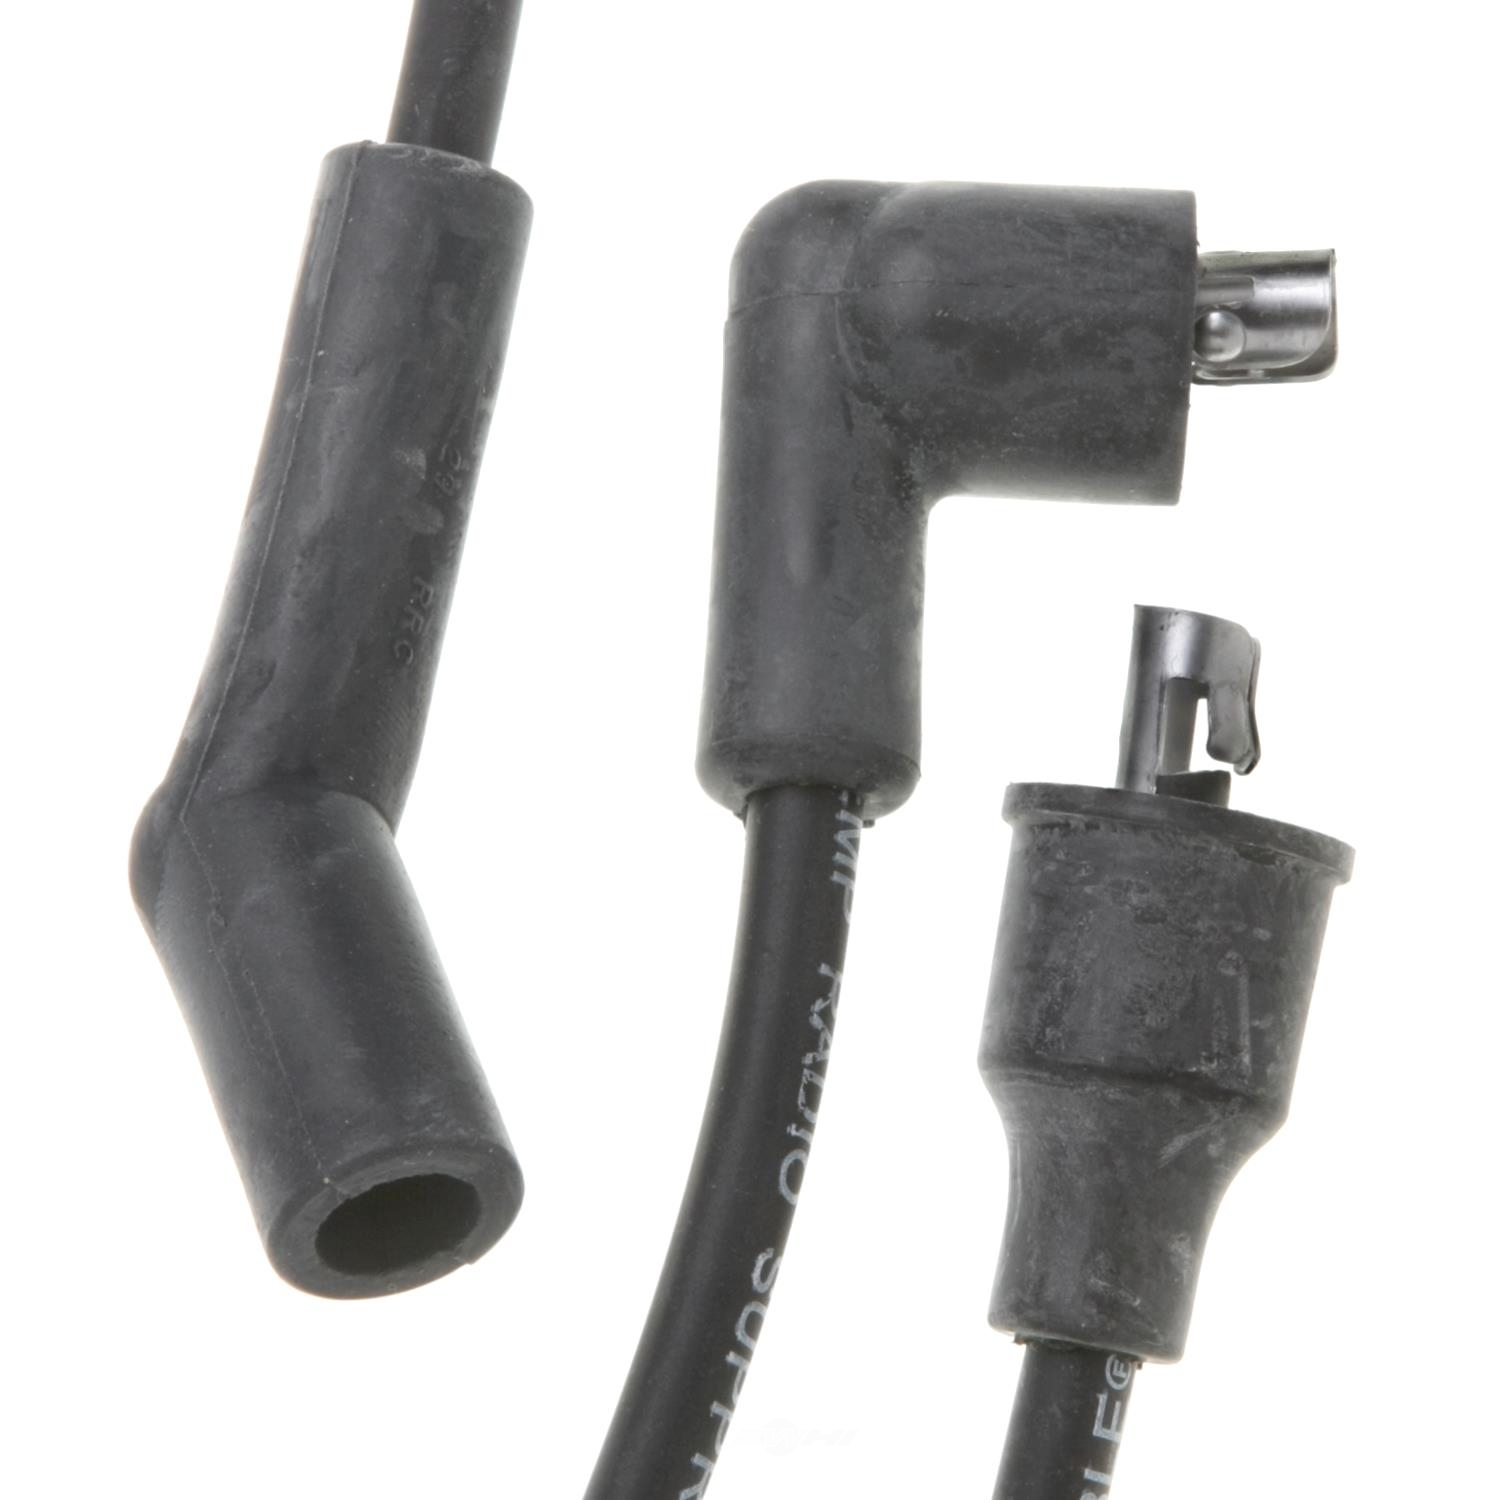 FEDERAL PARTS CORP. - Spark Plug Wire Set - FPC 2820